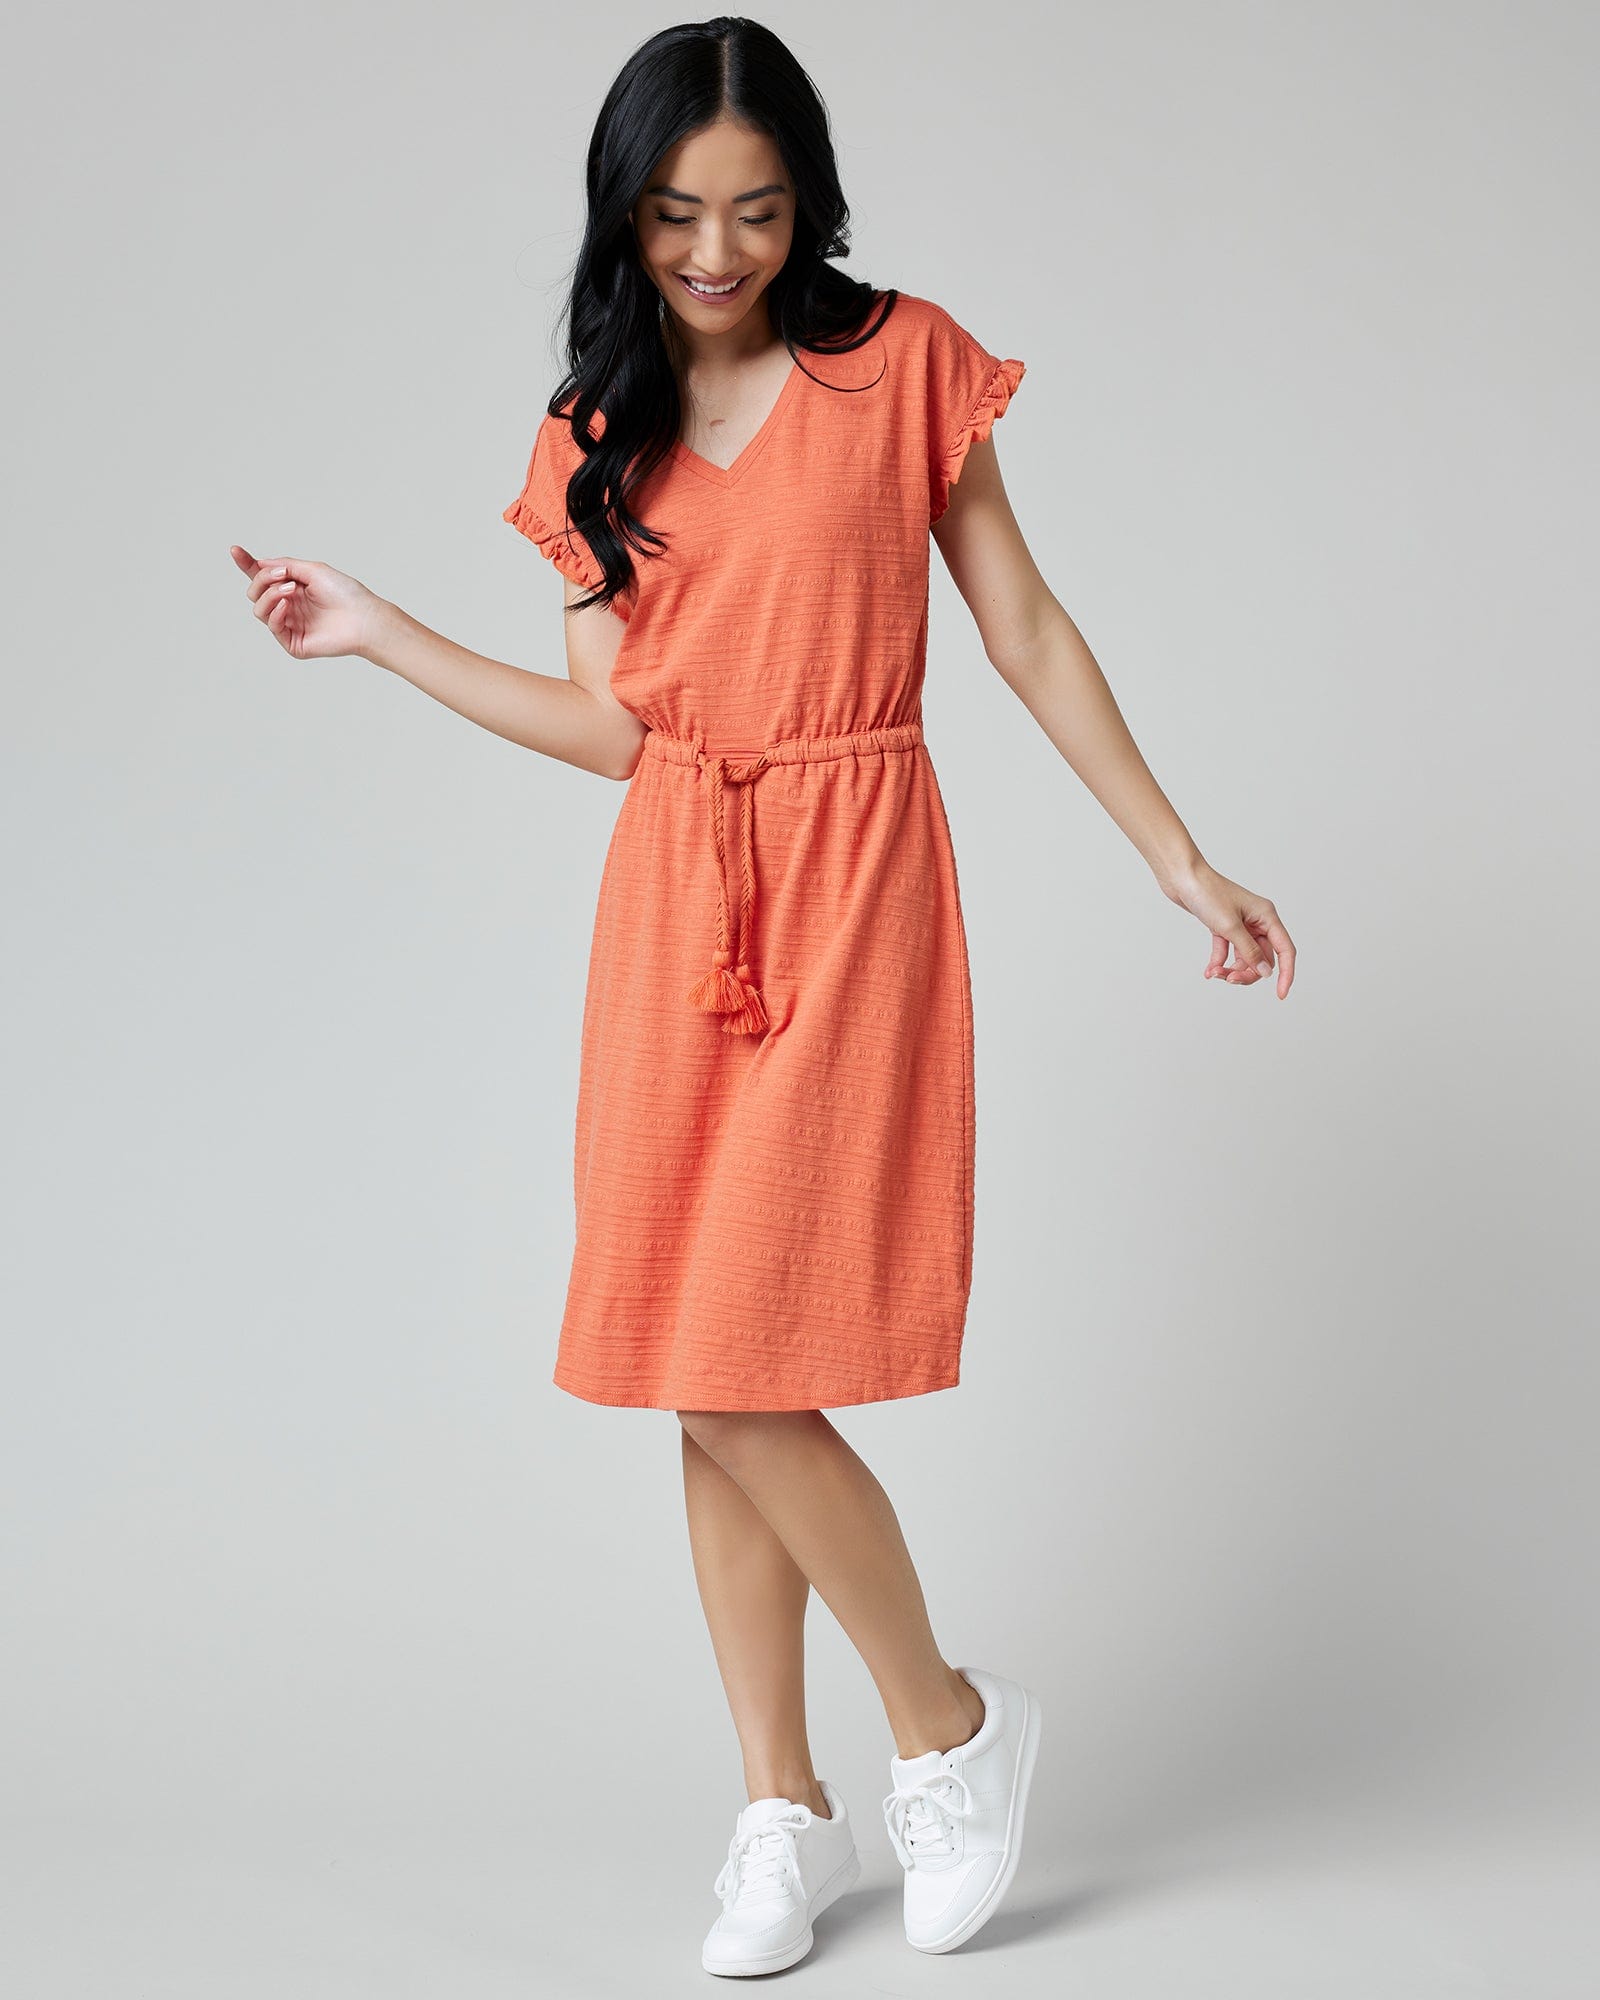 Woman in a short sleeve, v-neck, textured, orange dress